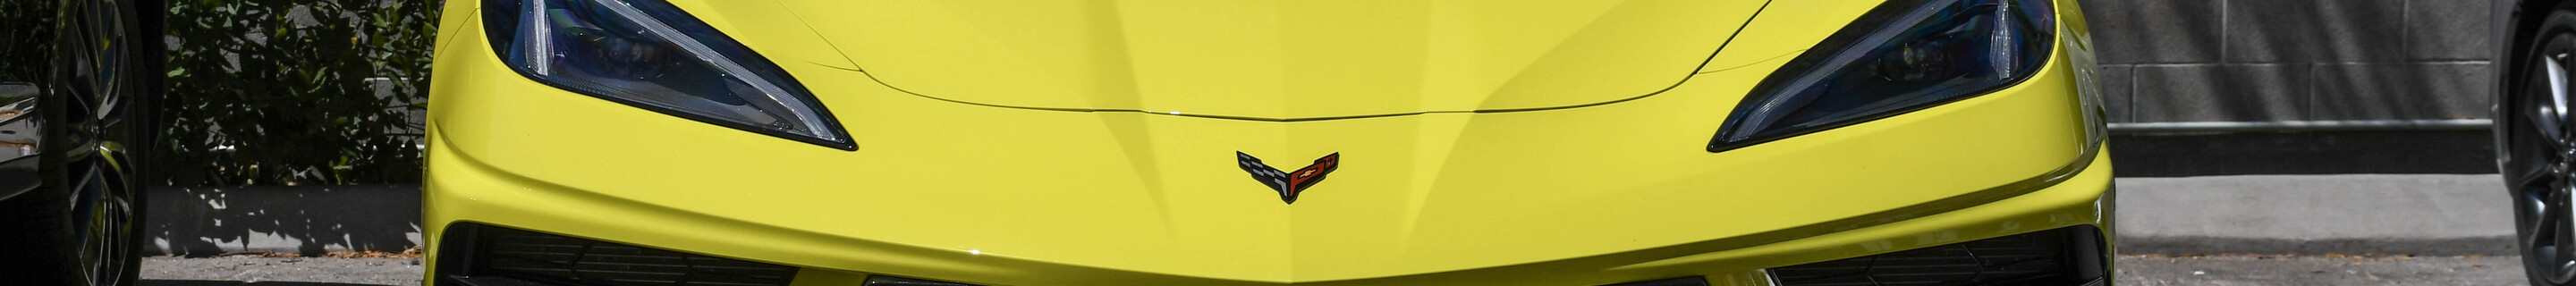 Chevrolet Corvette C8 Convertible